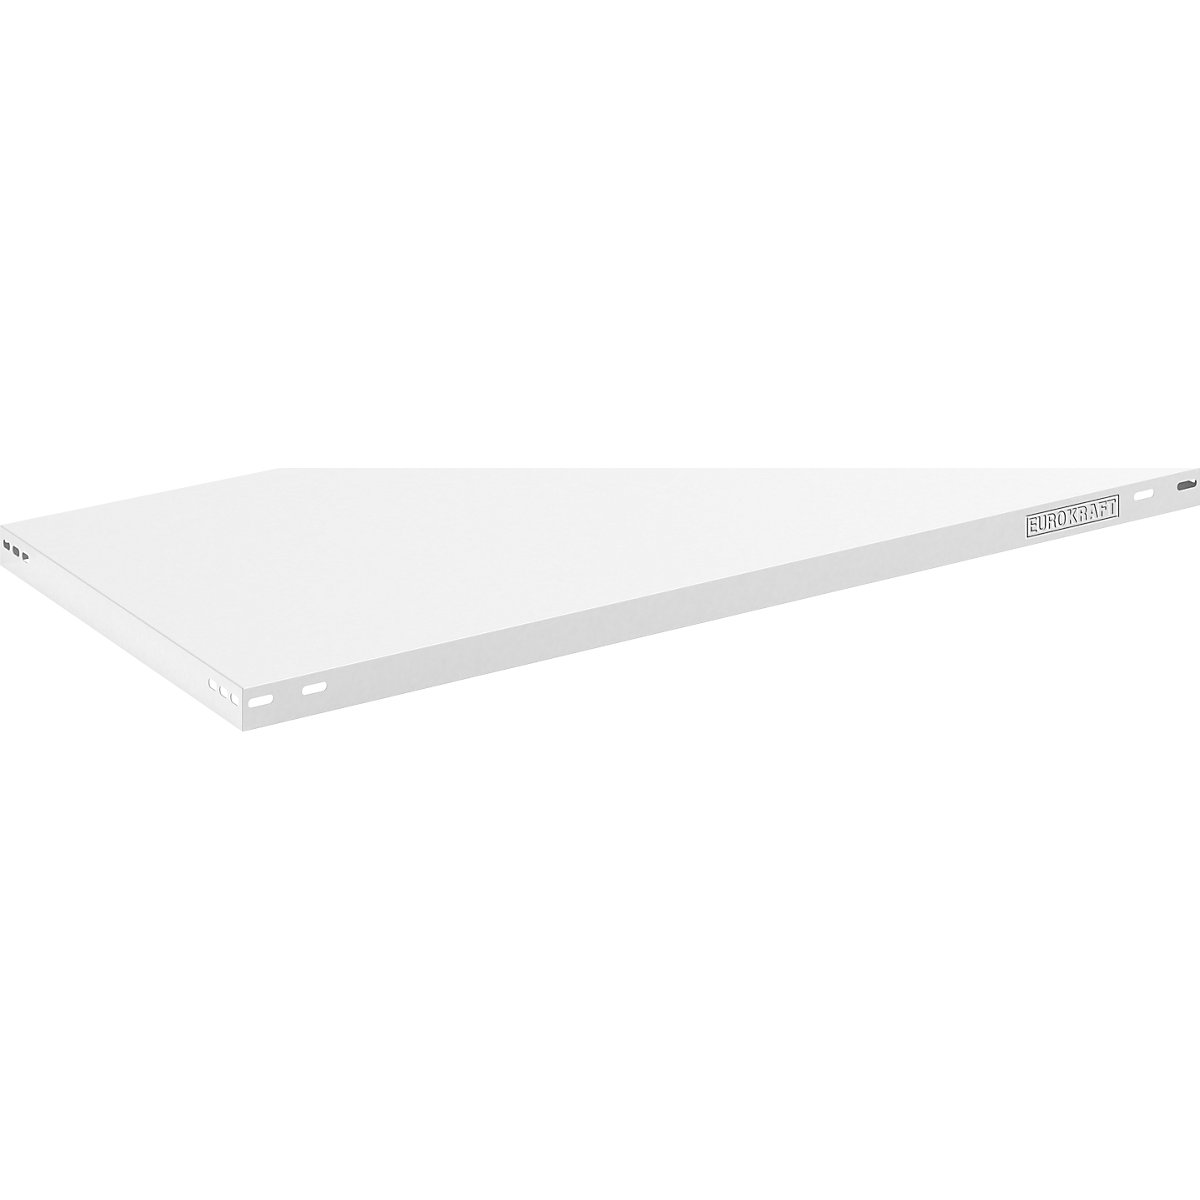 Shelf – eurokraft pro, plastic-coated, WxD 1000 x 600 mm